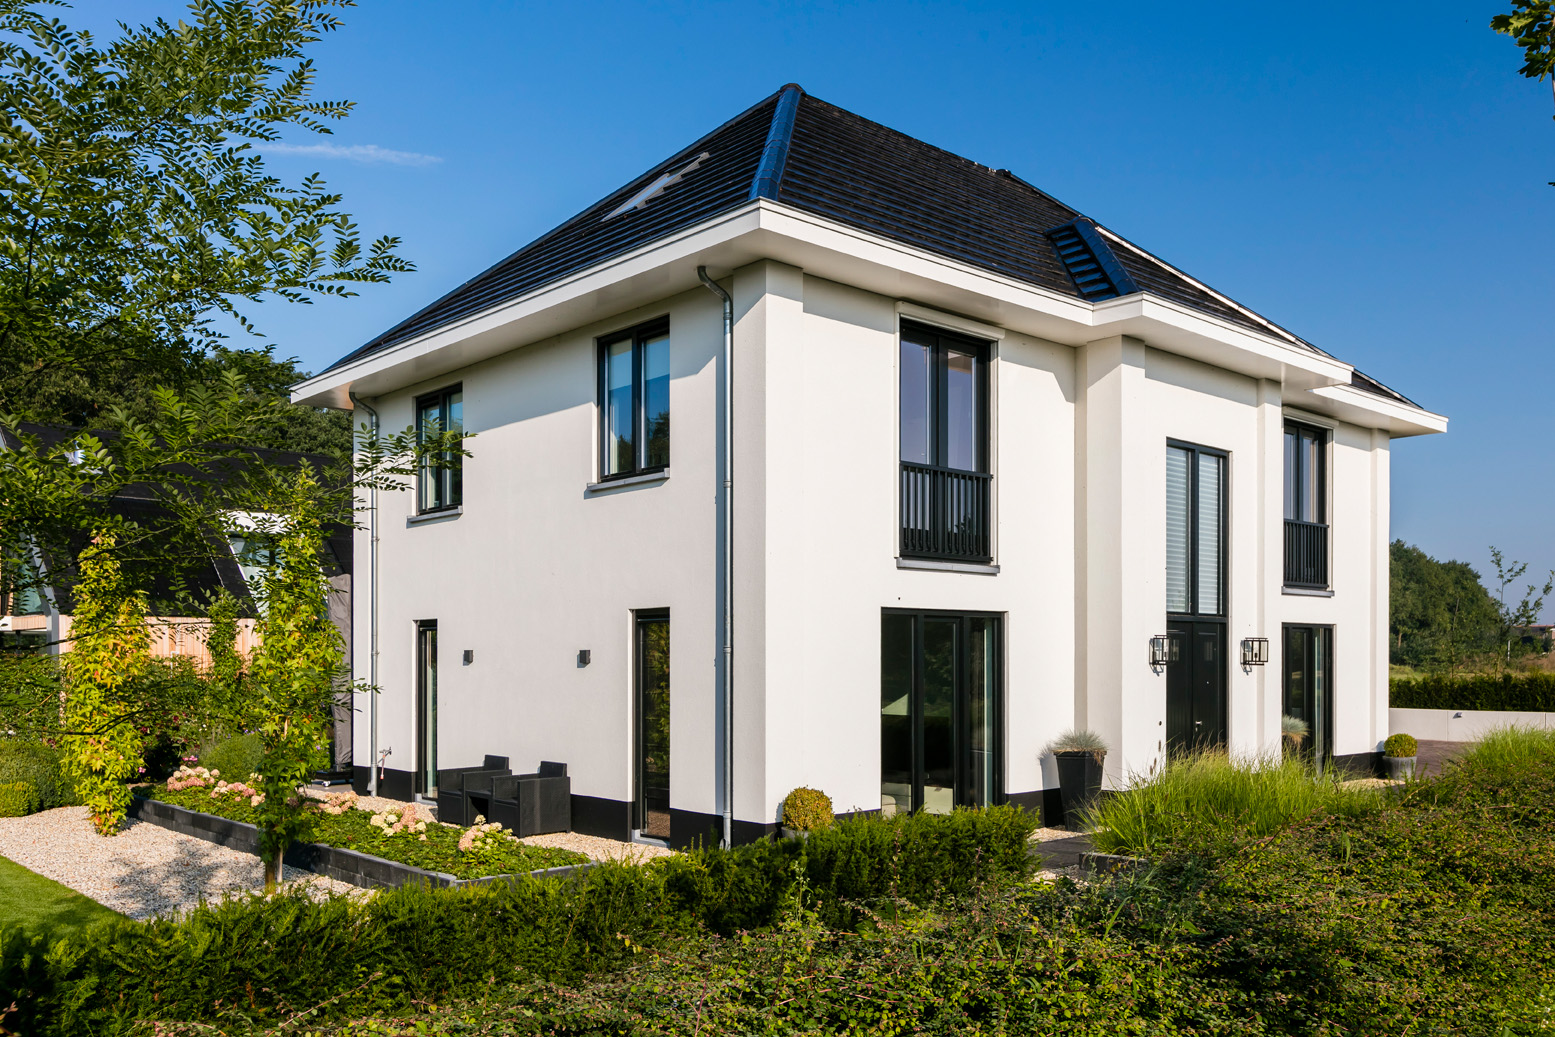 Foto: Woning bouwen   Huis bouwen   Villa Lindepijlstaart te Zwolle   Architectuurwonen